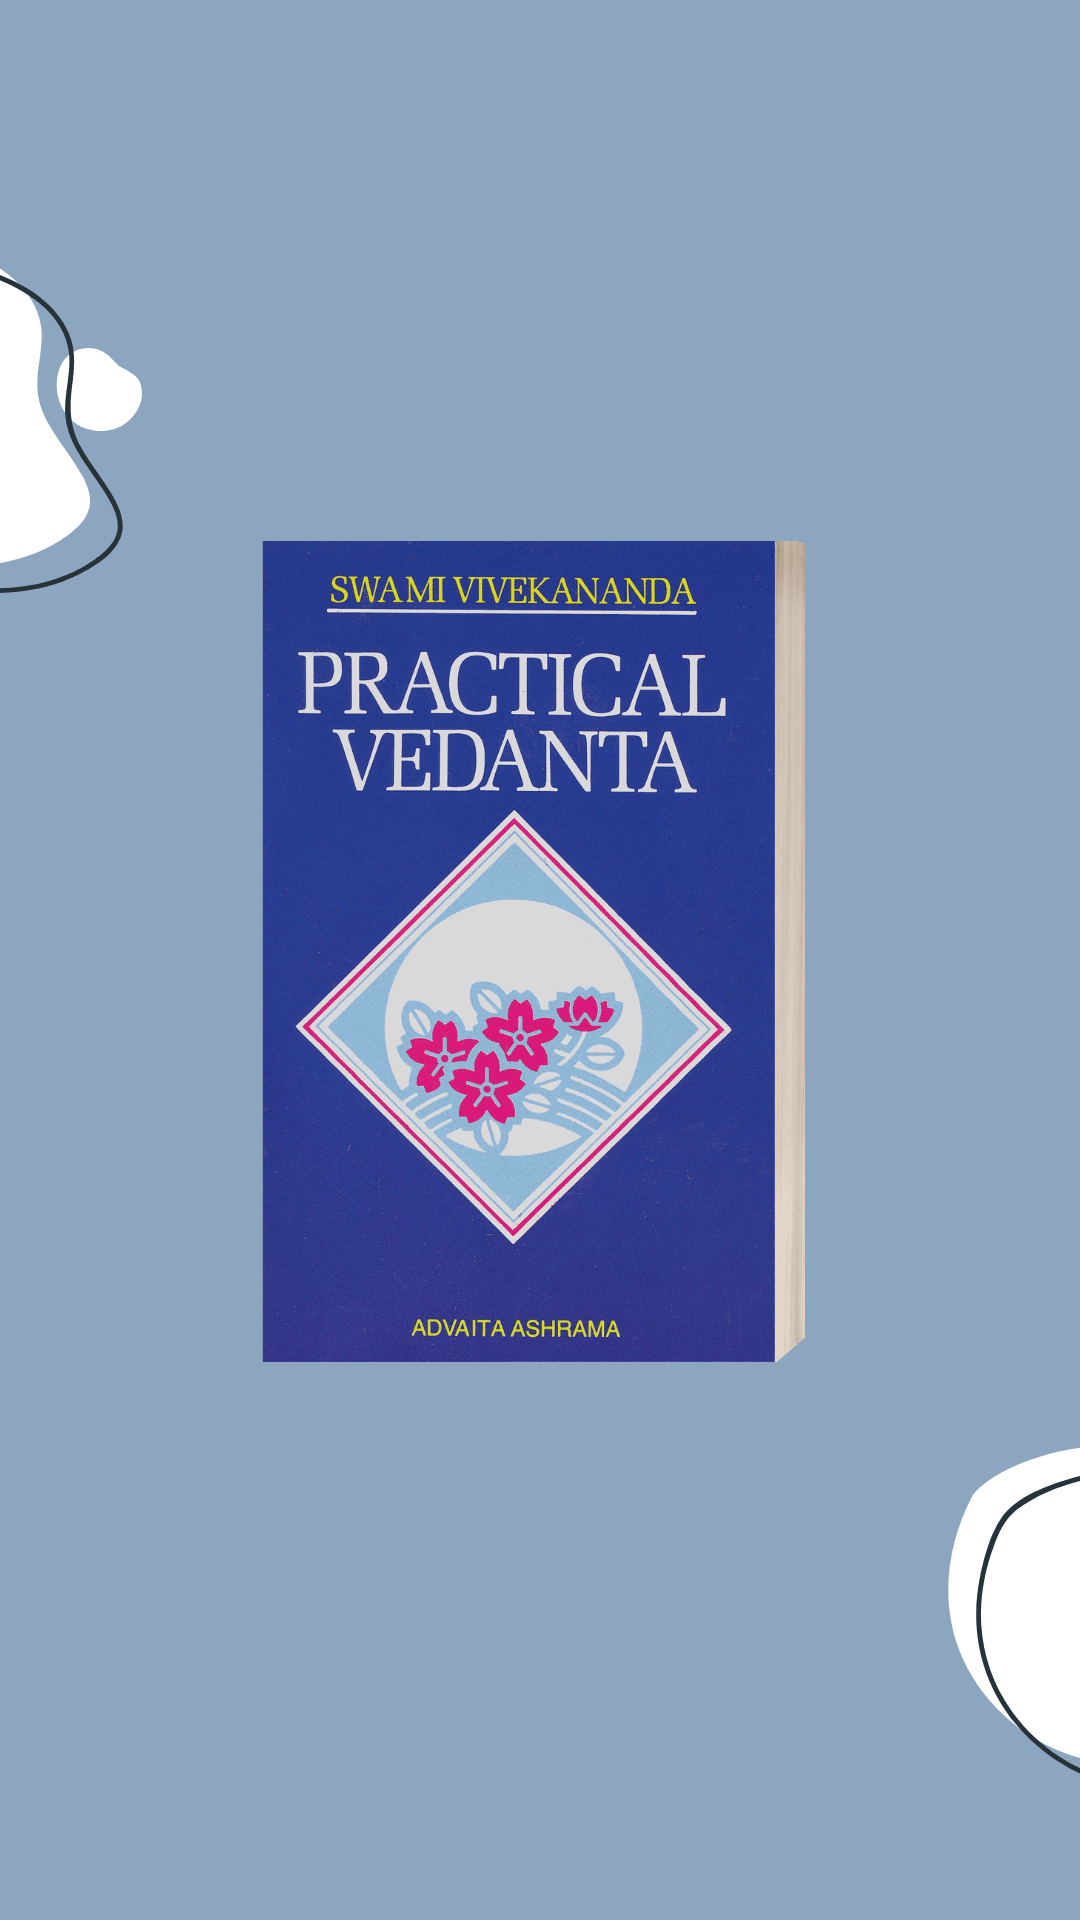 Practical Vedanta by Swami Vivekanand